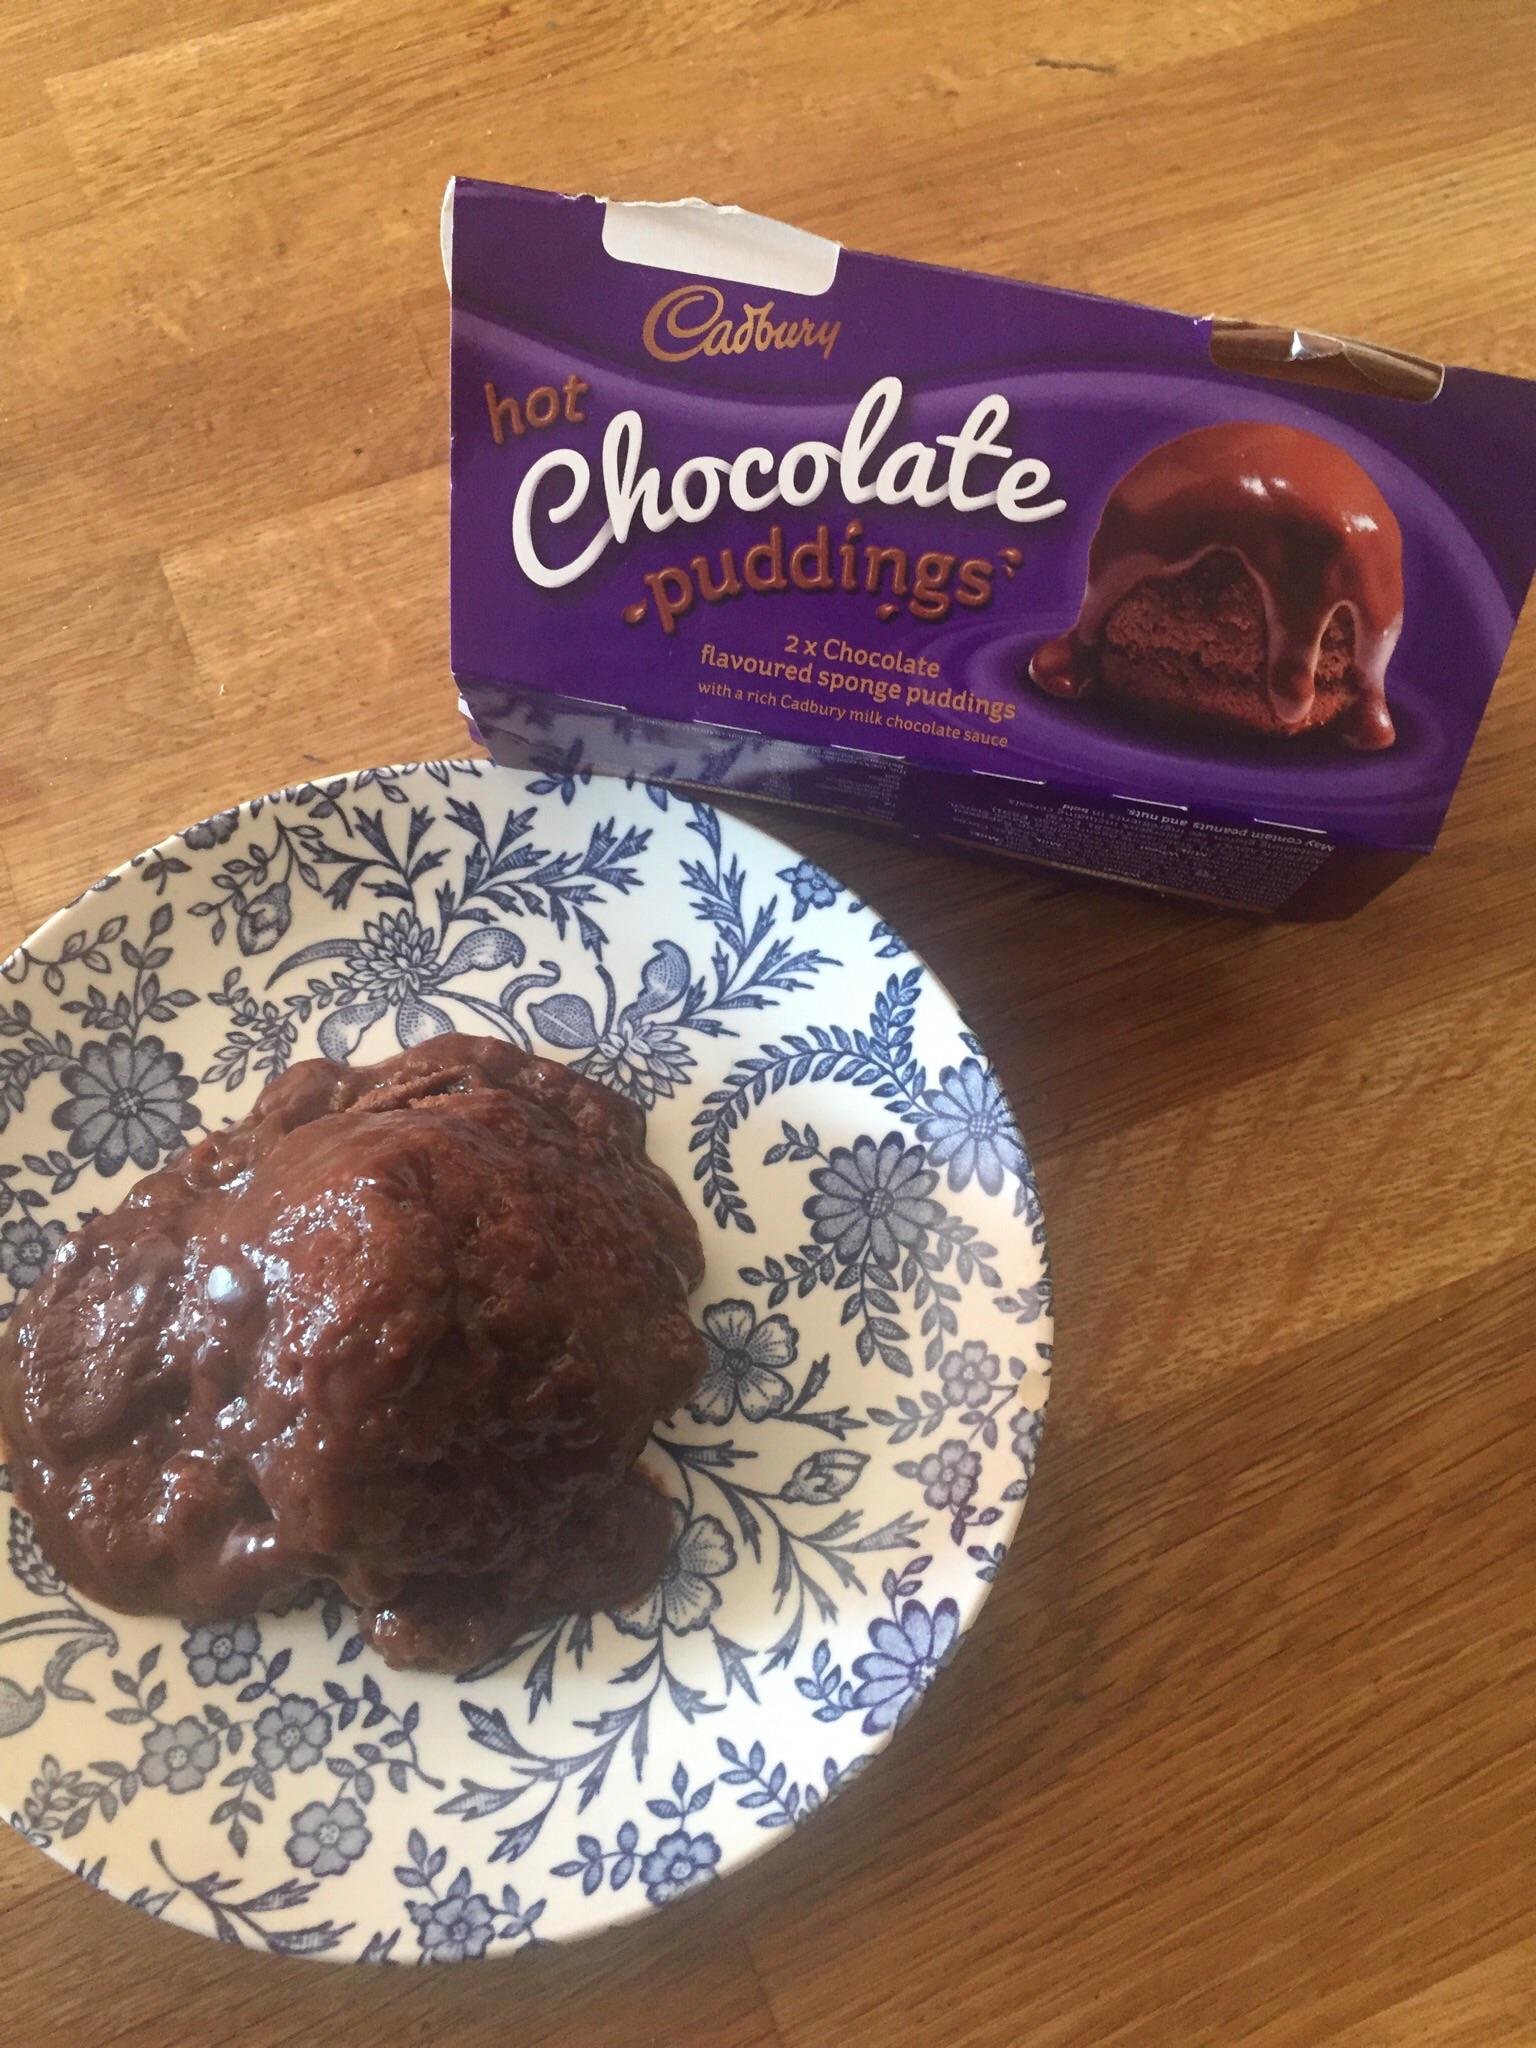 Expectation vs. Reality - Cadbury chocolate ouddings 2x Chocolate flavoured sponge puddings with a rich Cadbury milk chocolate sauce